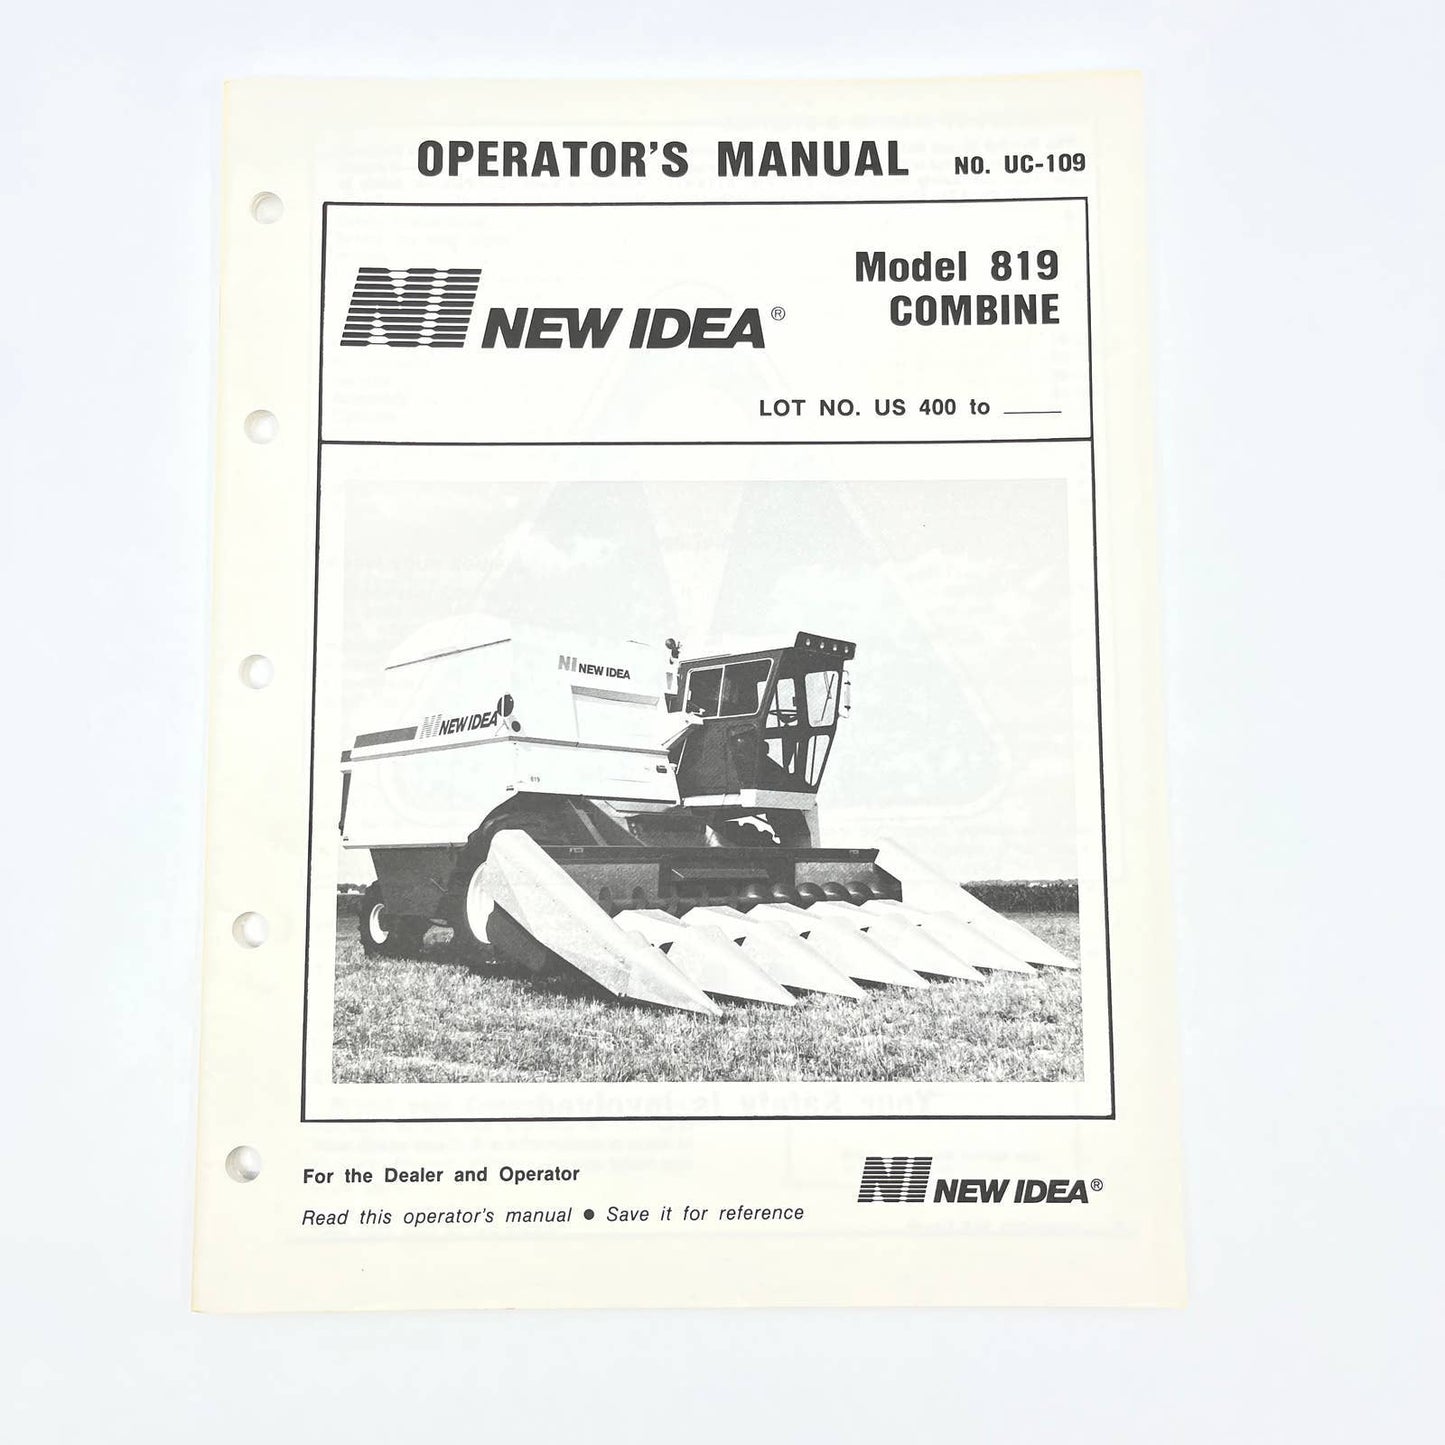 Original 1989 New Idea Operator's Manual Model 818 Combine UC-109 TB9